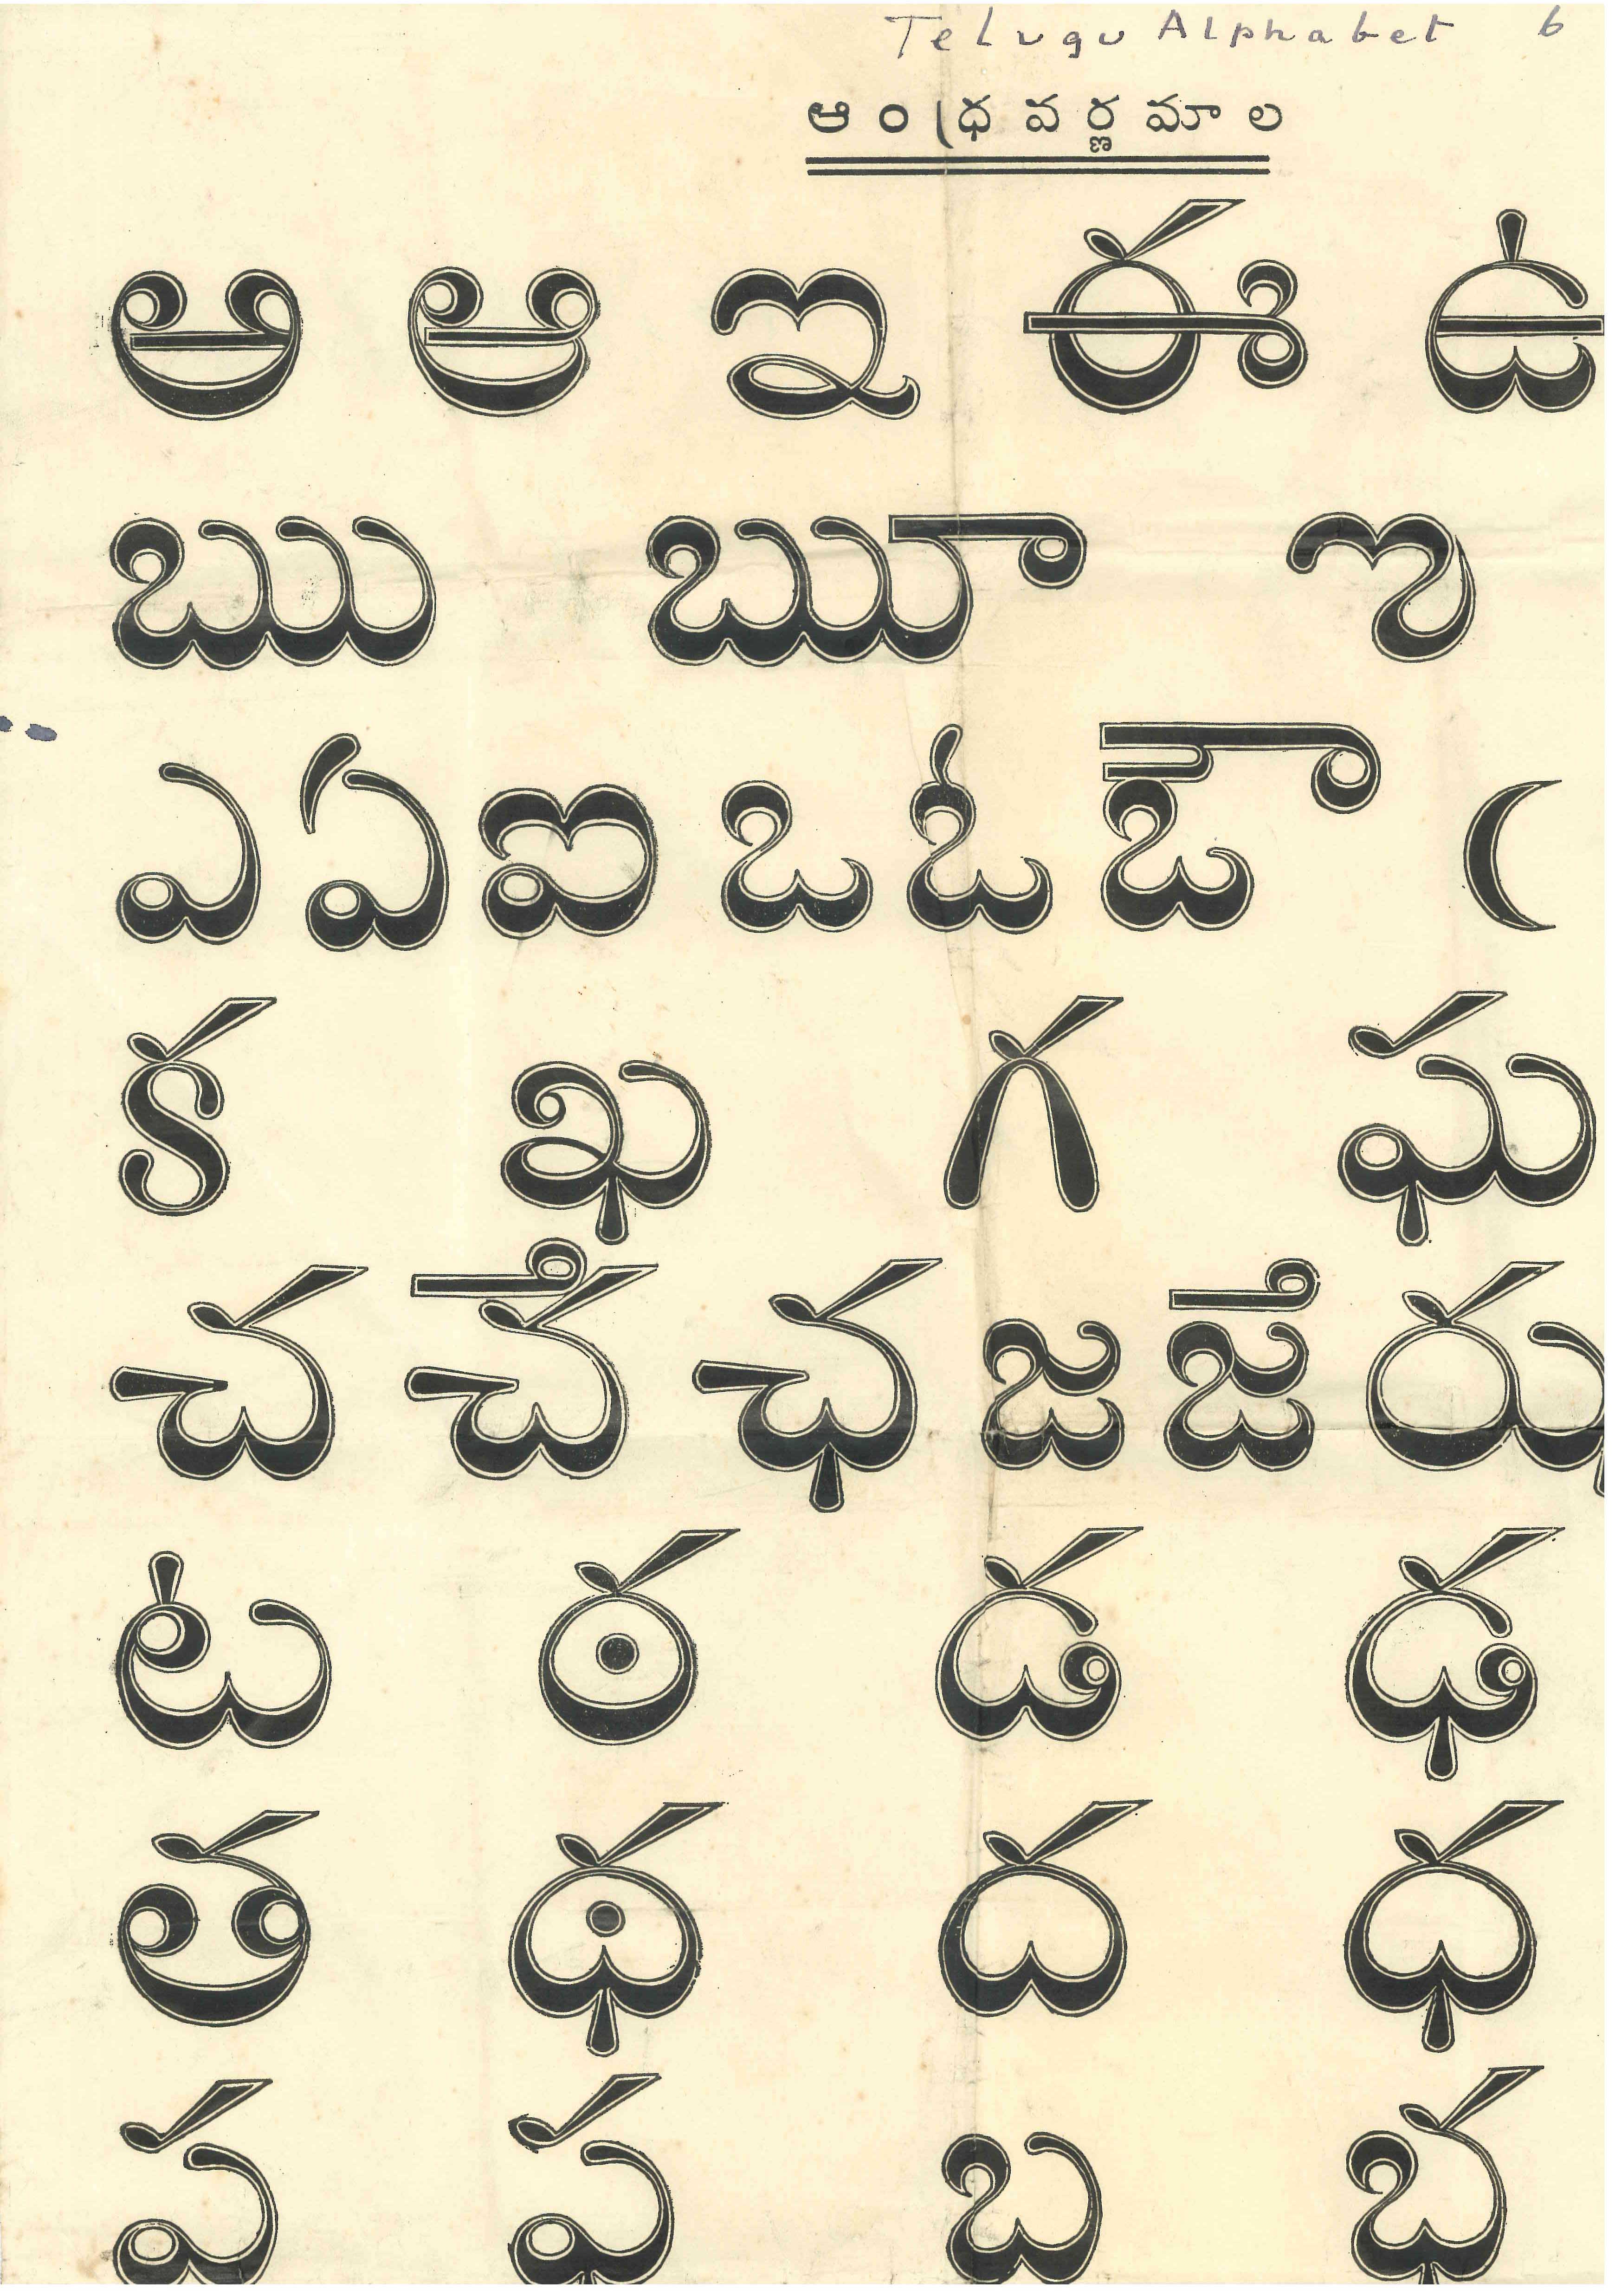 Printables Telugu Alphabets Chart part of the telugu language alphabet chart kin 19611 fossick 19611